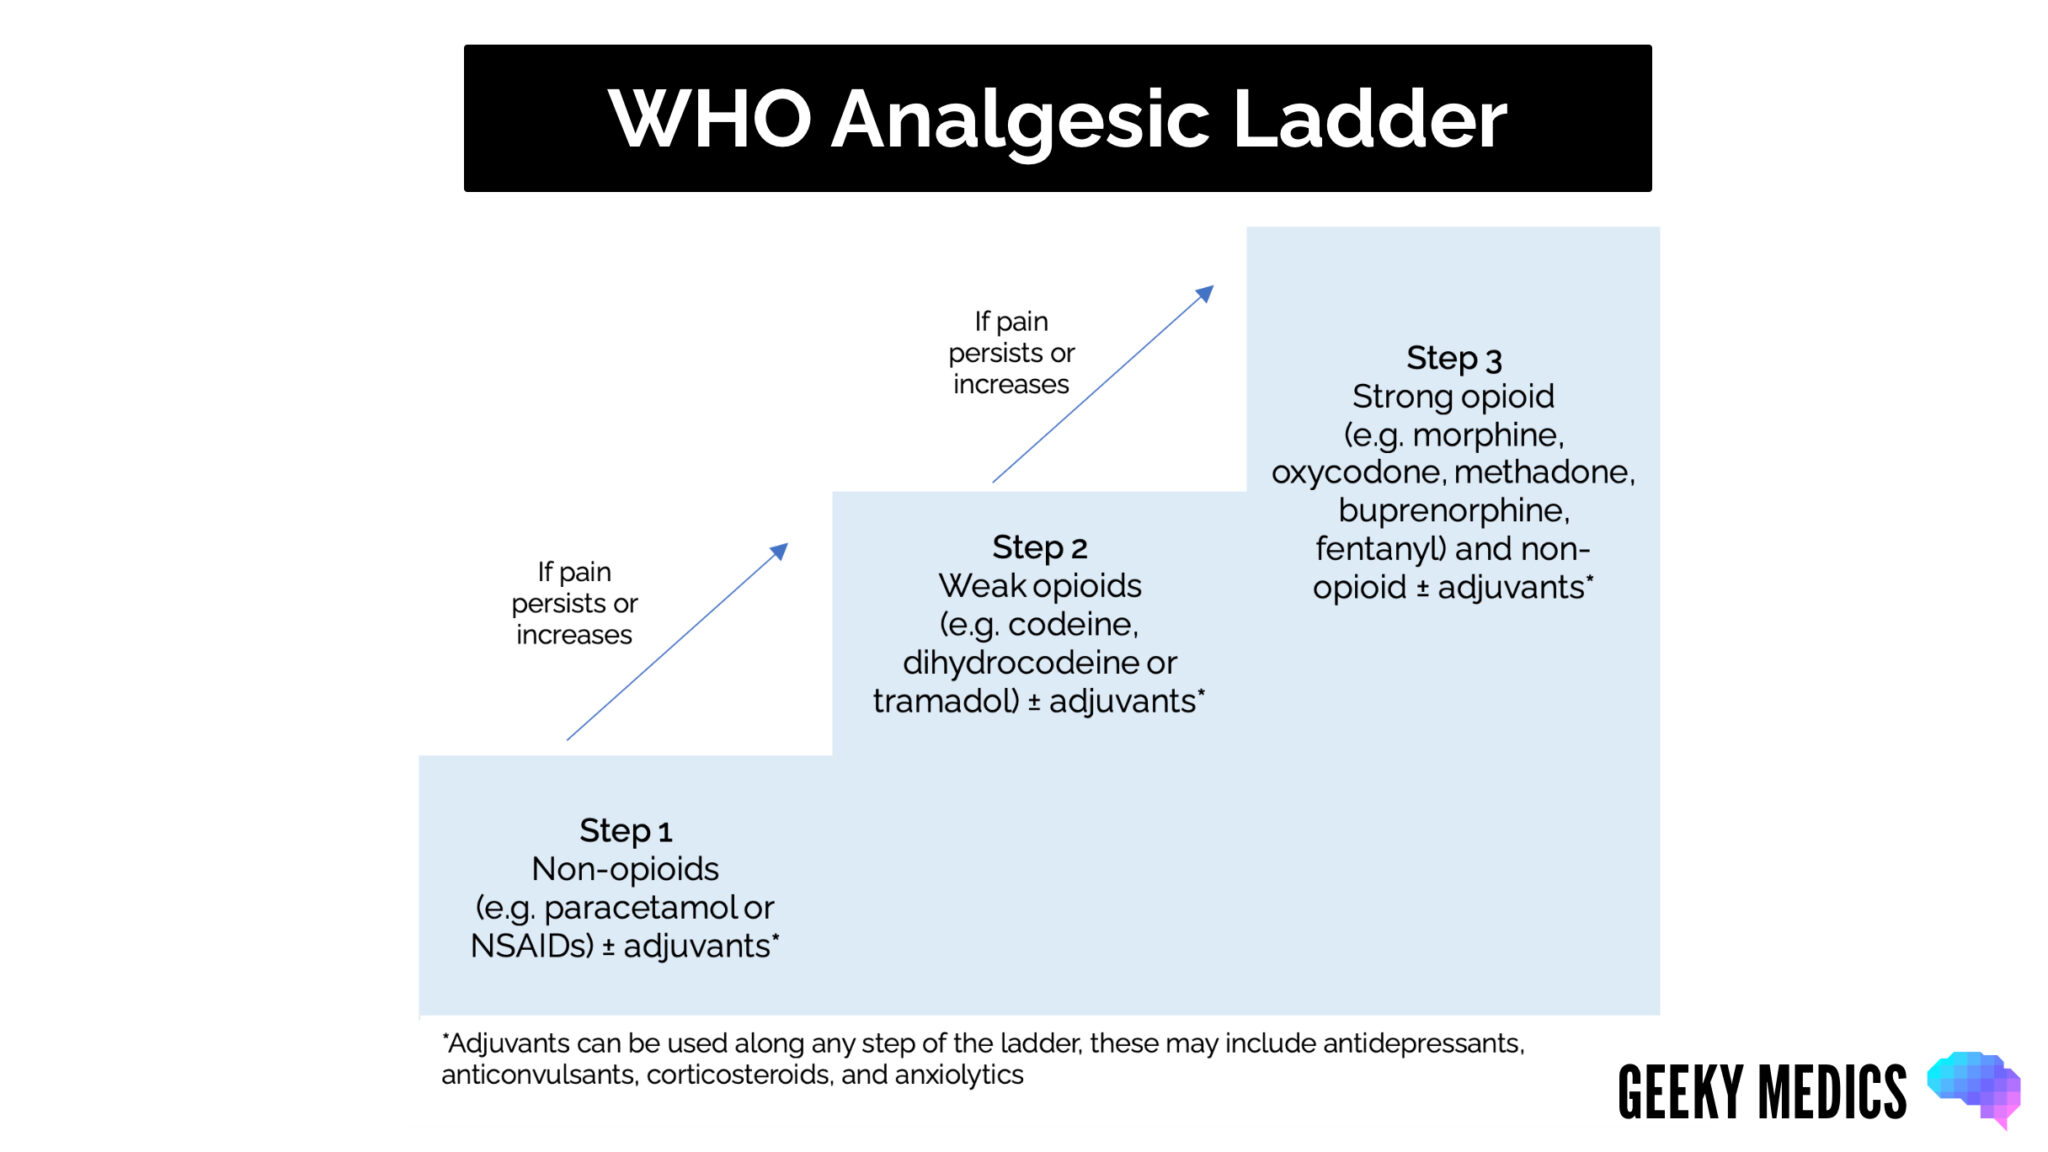 The WHO analgesic ladder for prescribing analgesia